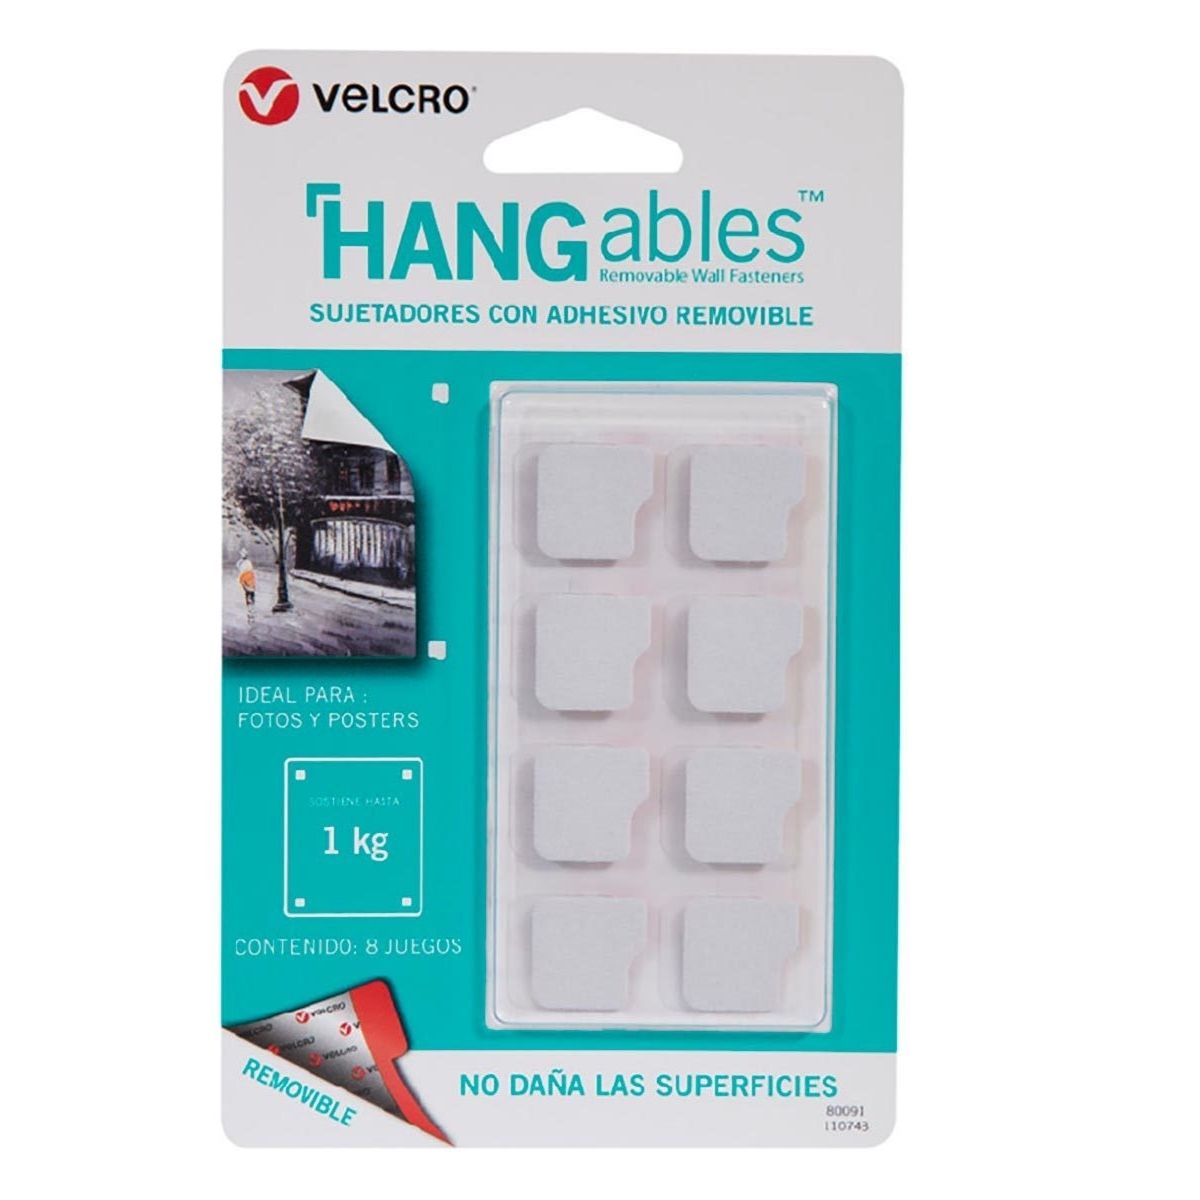 8 Pack Cuadros sujetadores Velcro adheribles HANGables Blancos - MarchanteMX